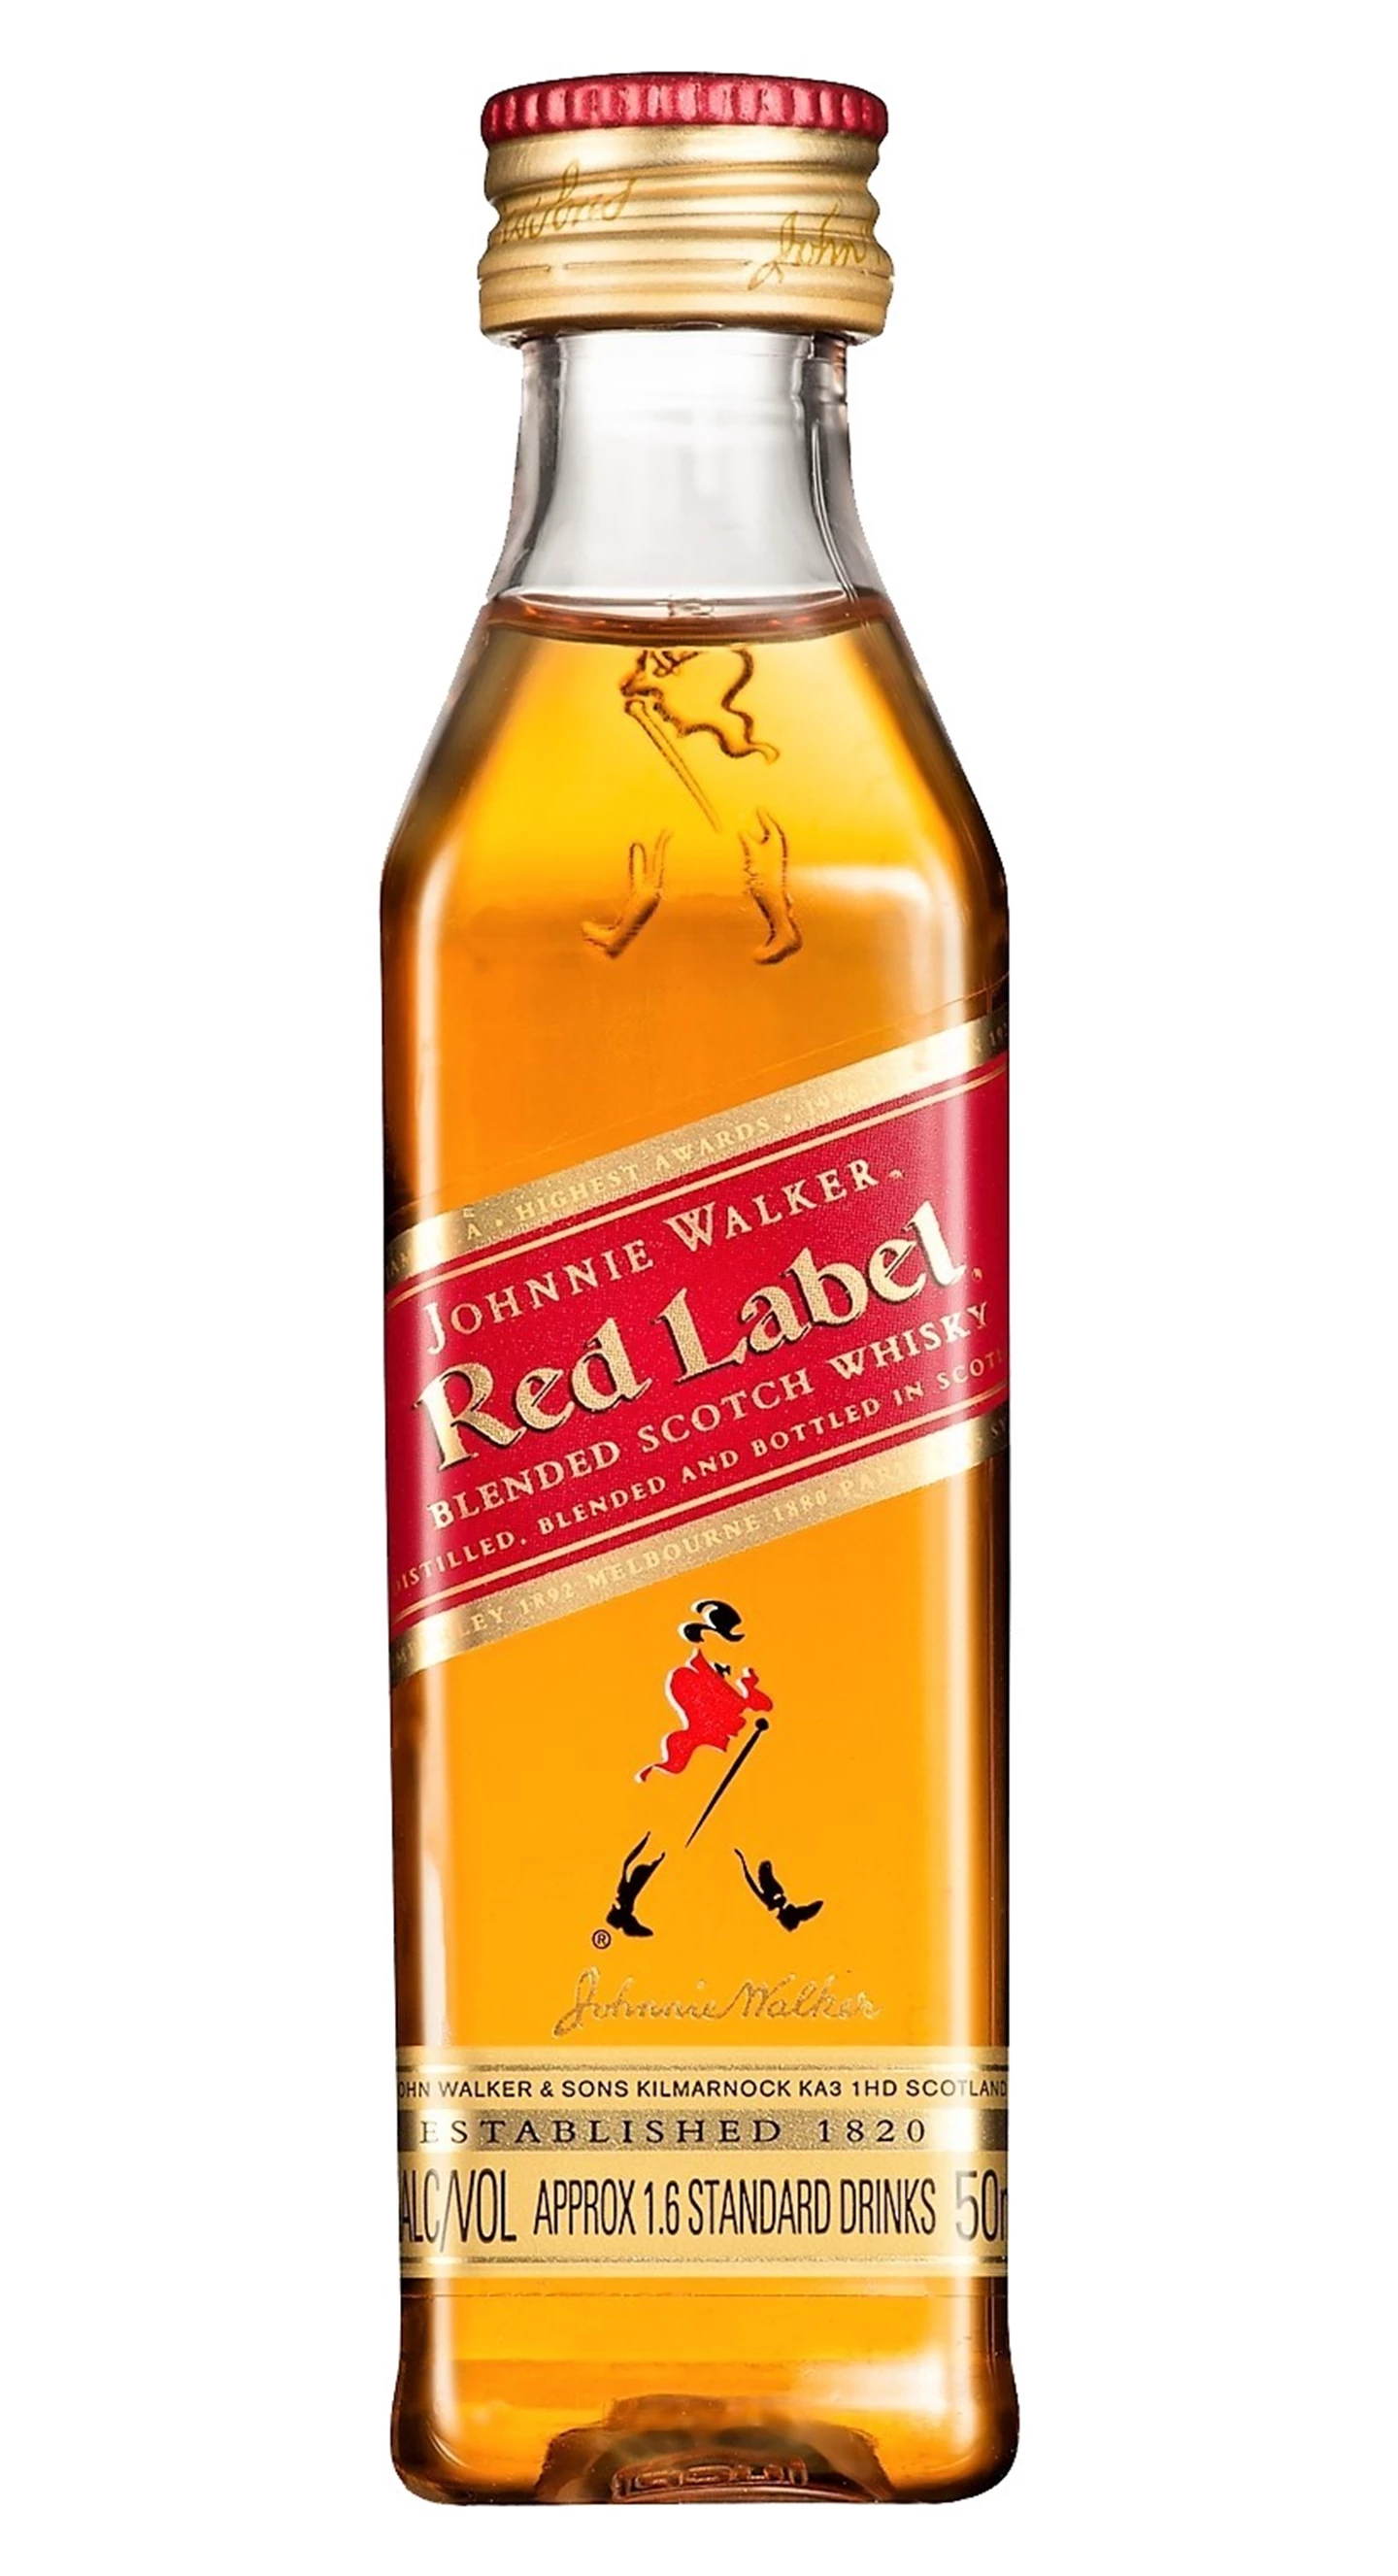 Johnnie Walker Red Label Scotch Whisky 5Cl